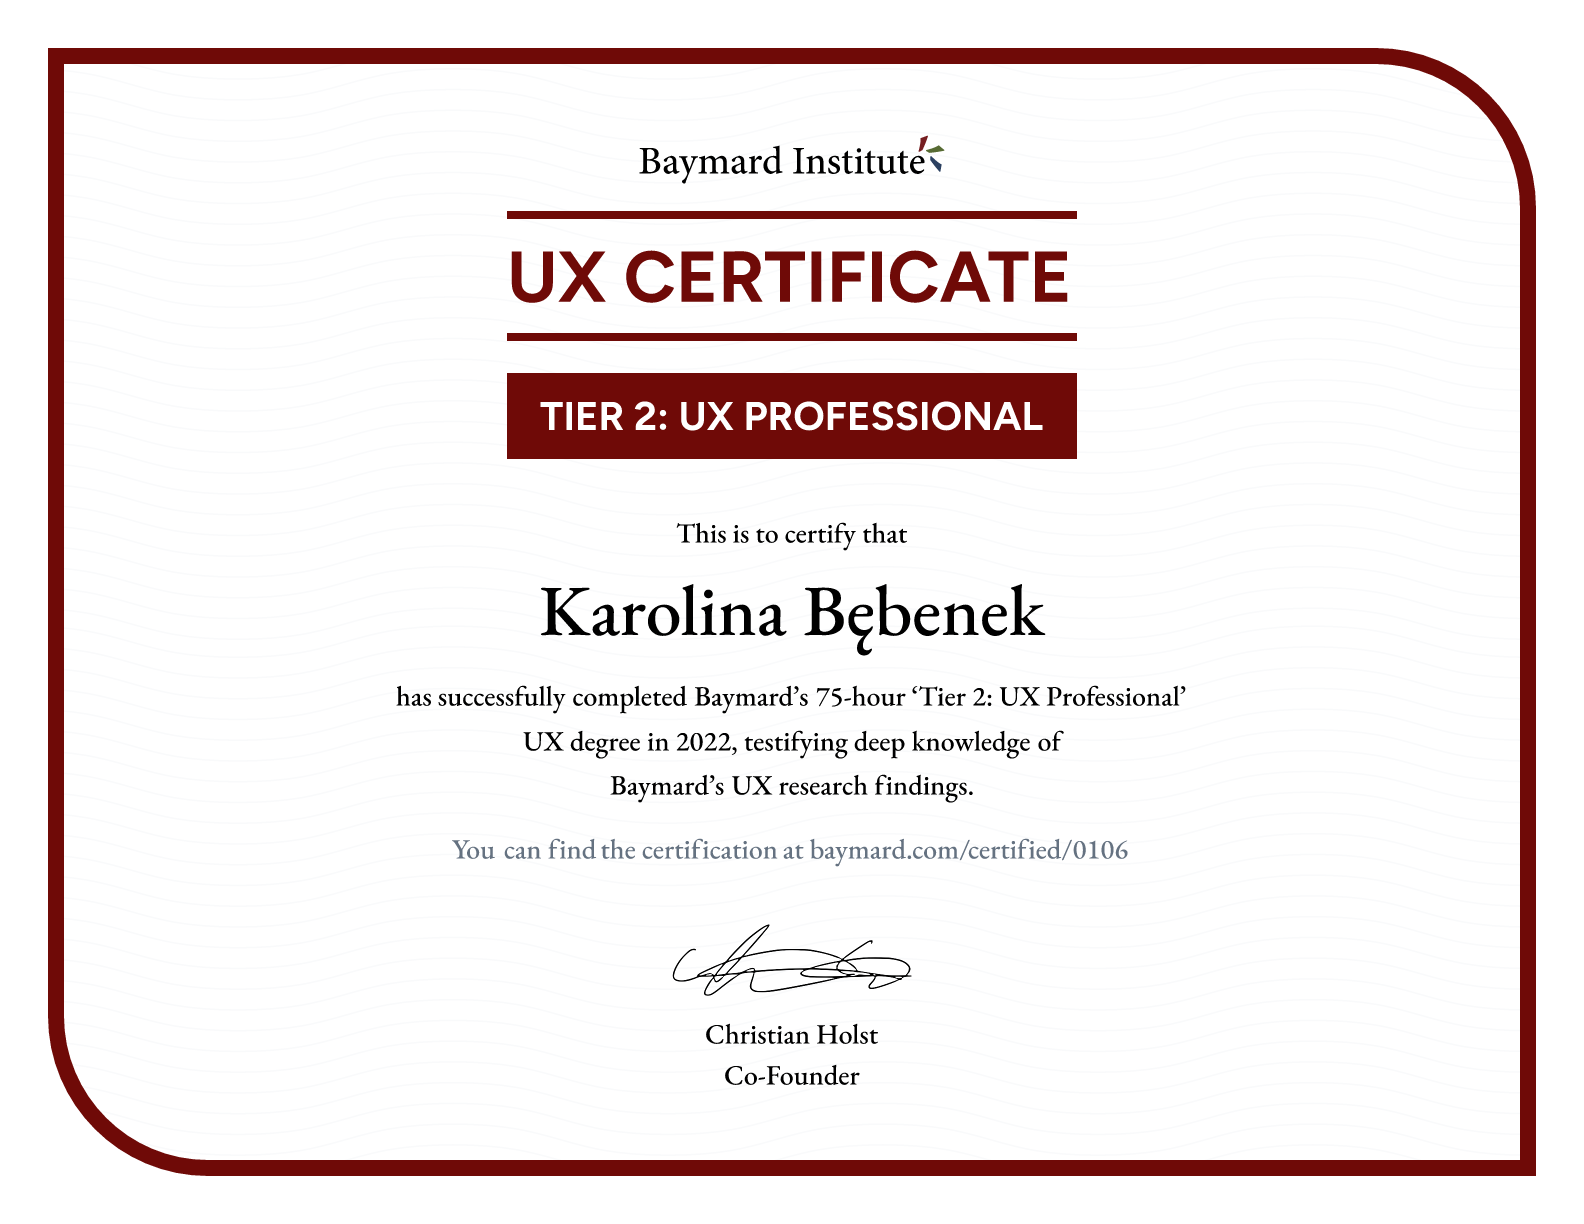 Karolina Bębenek’s certificate